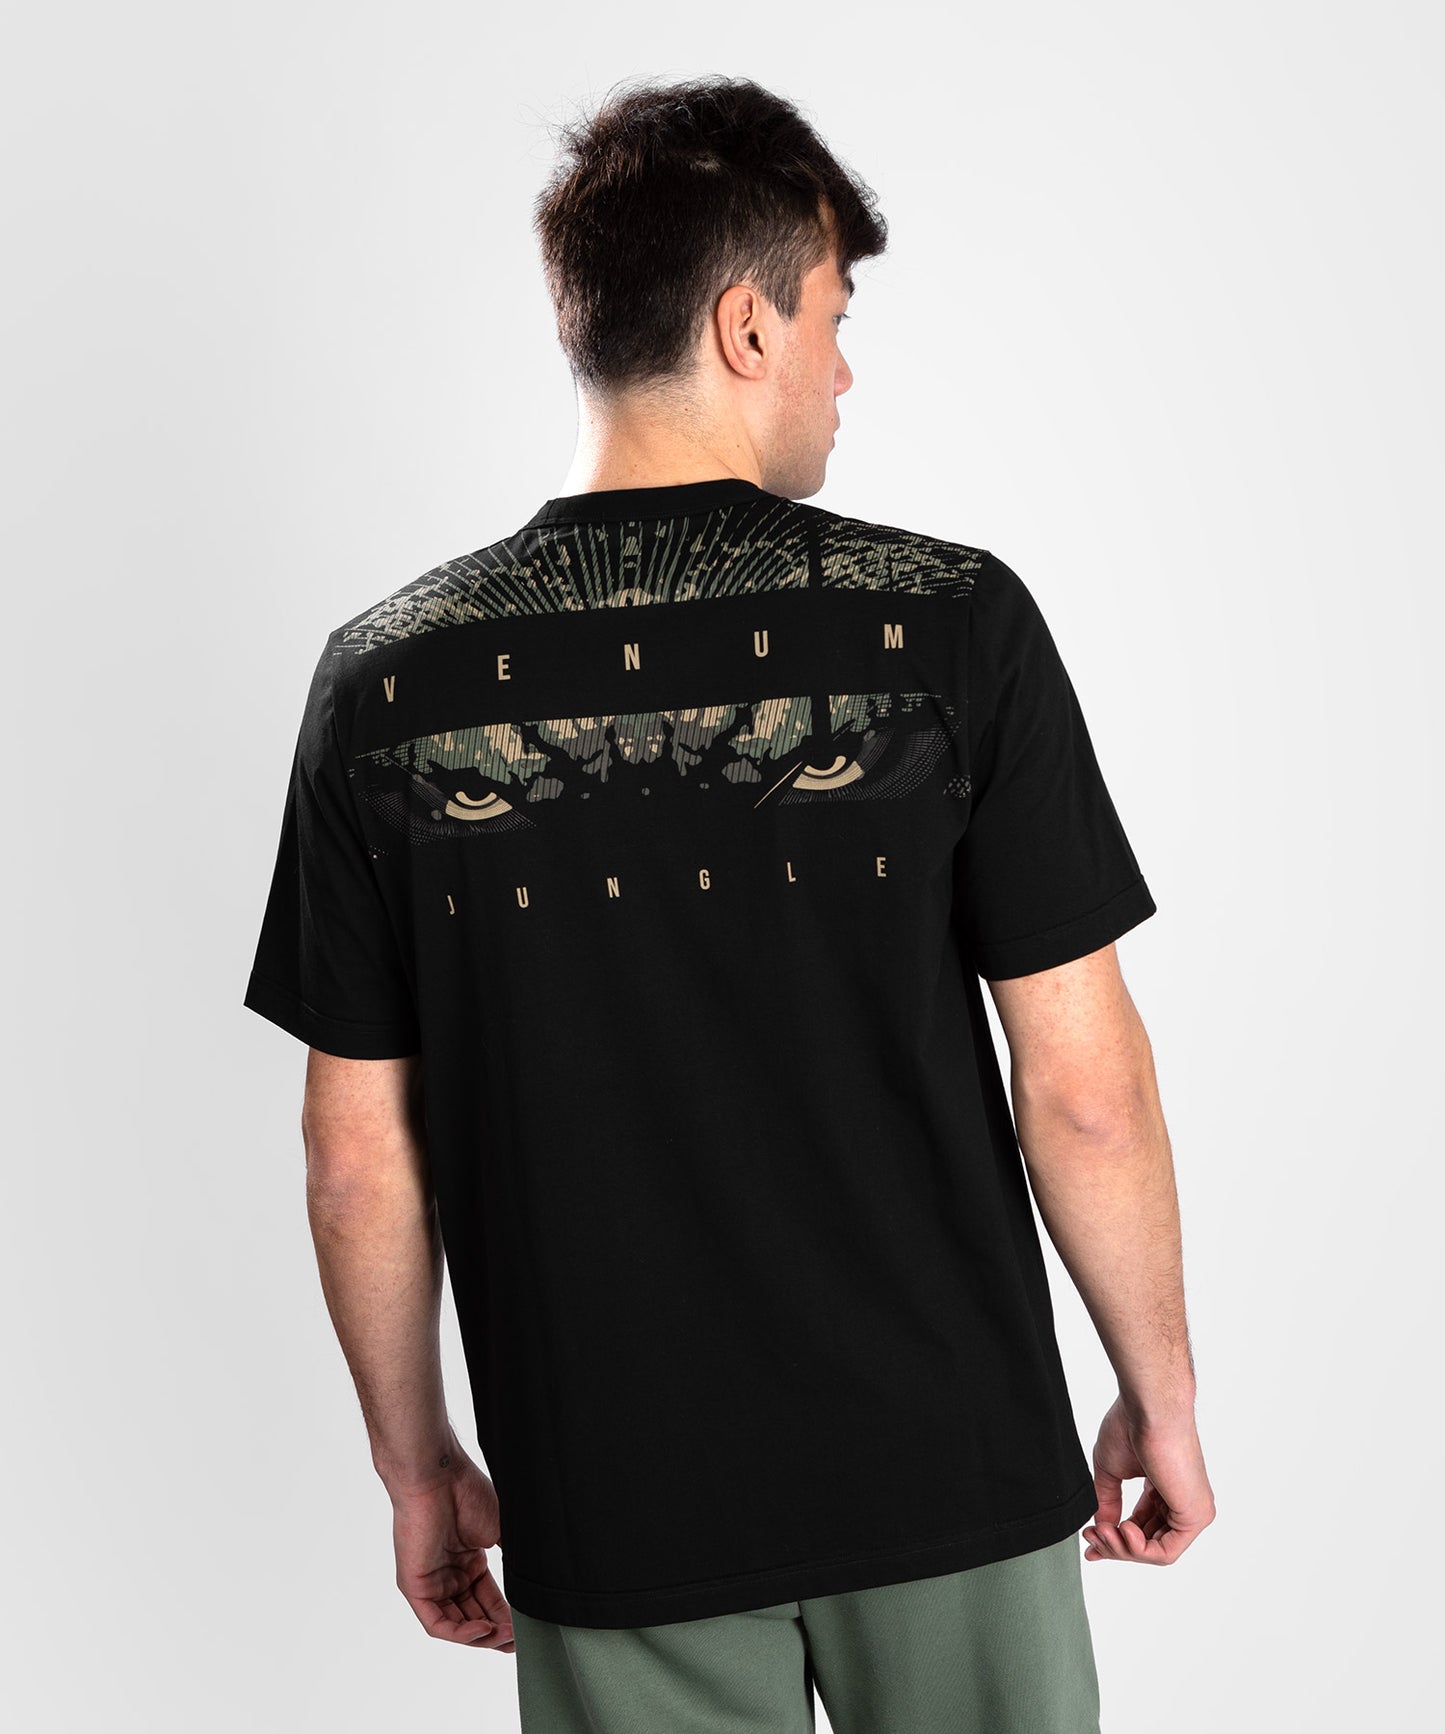 Venum Gorilla Jungle T-Shirt - Black/Sand